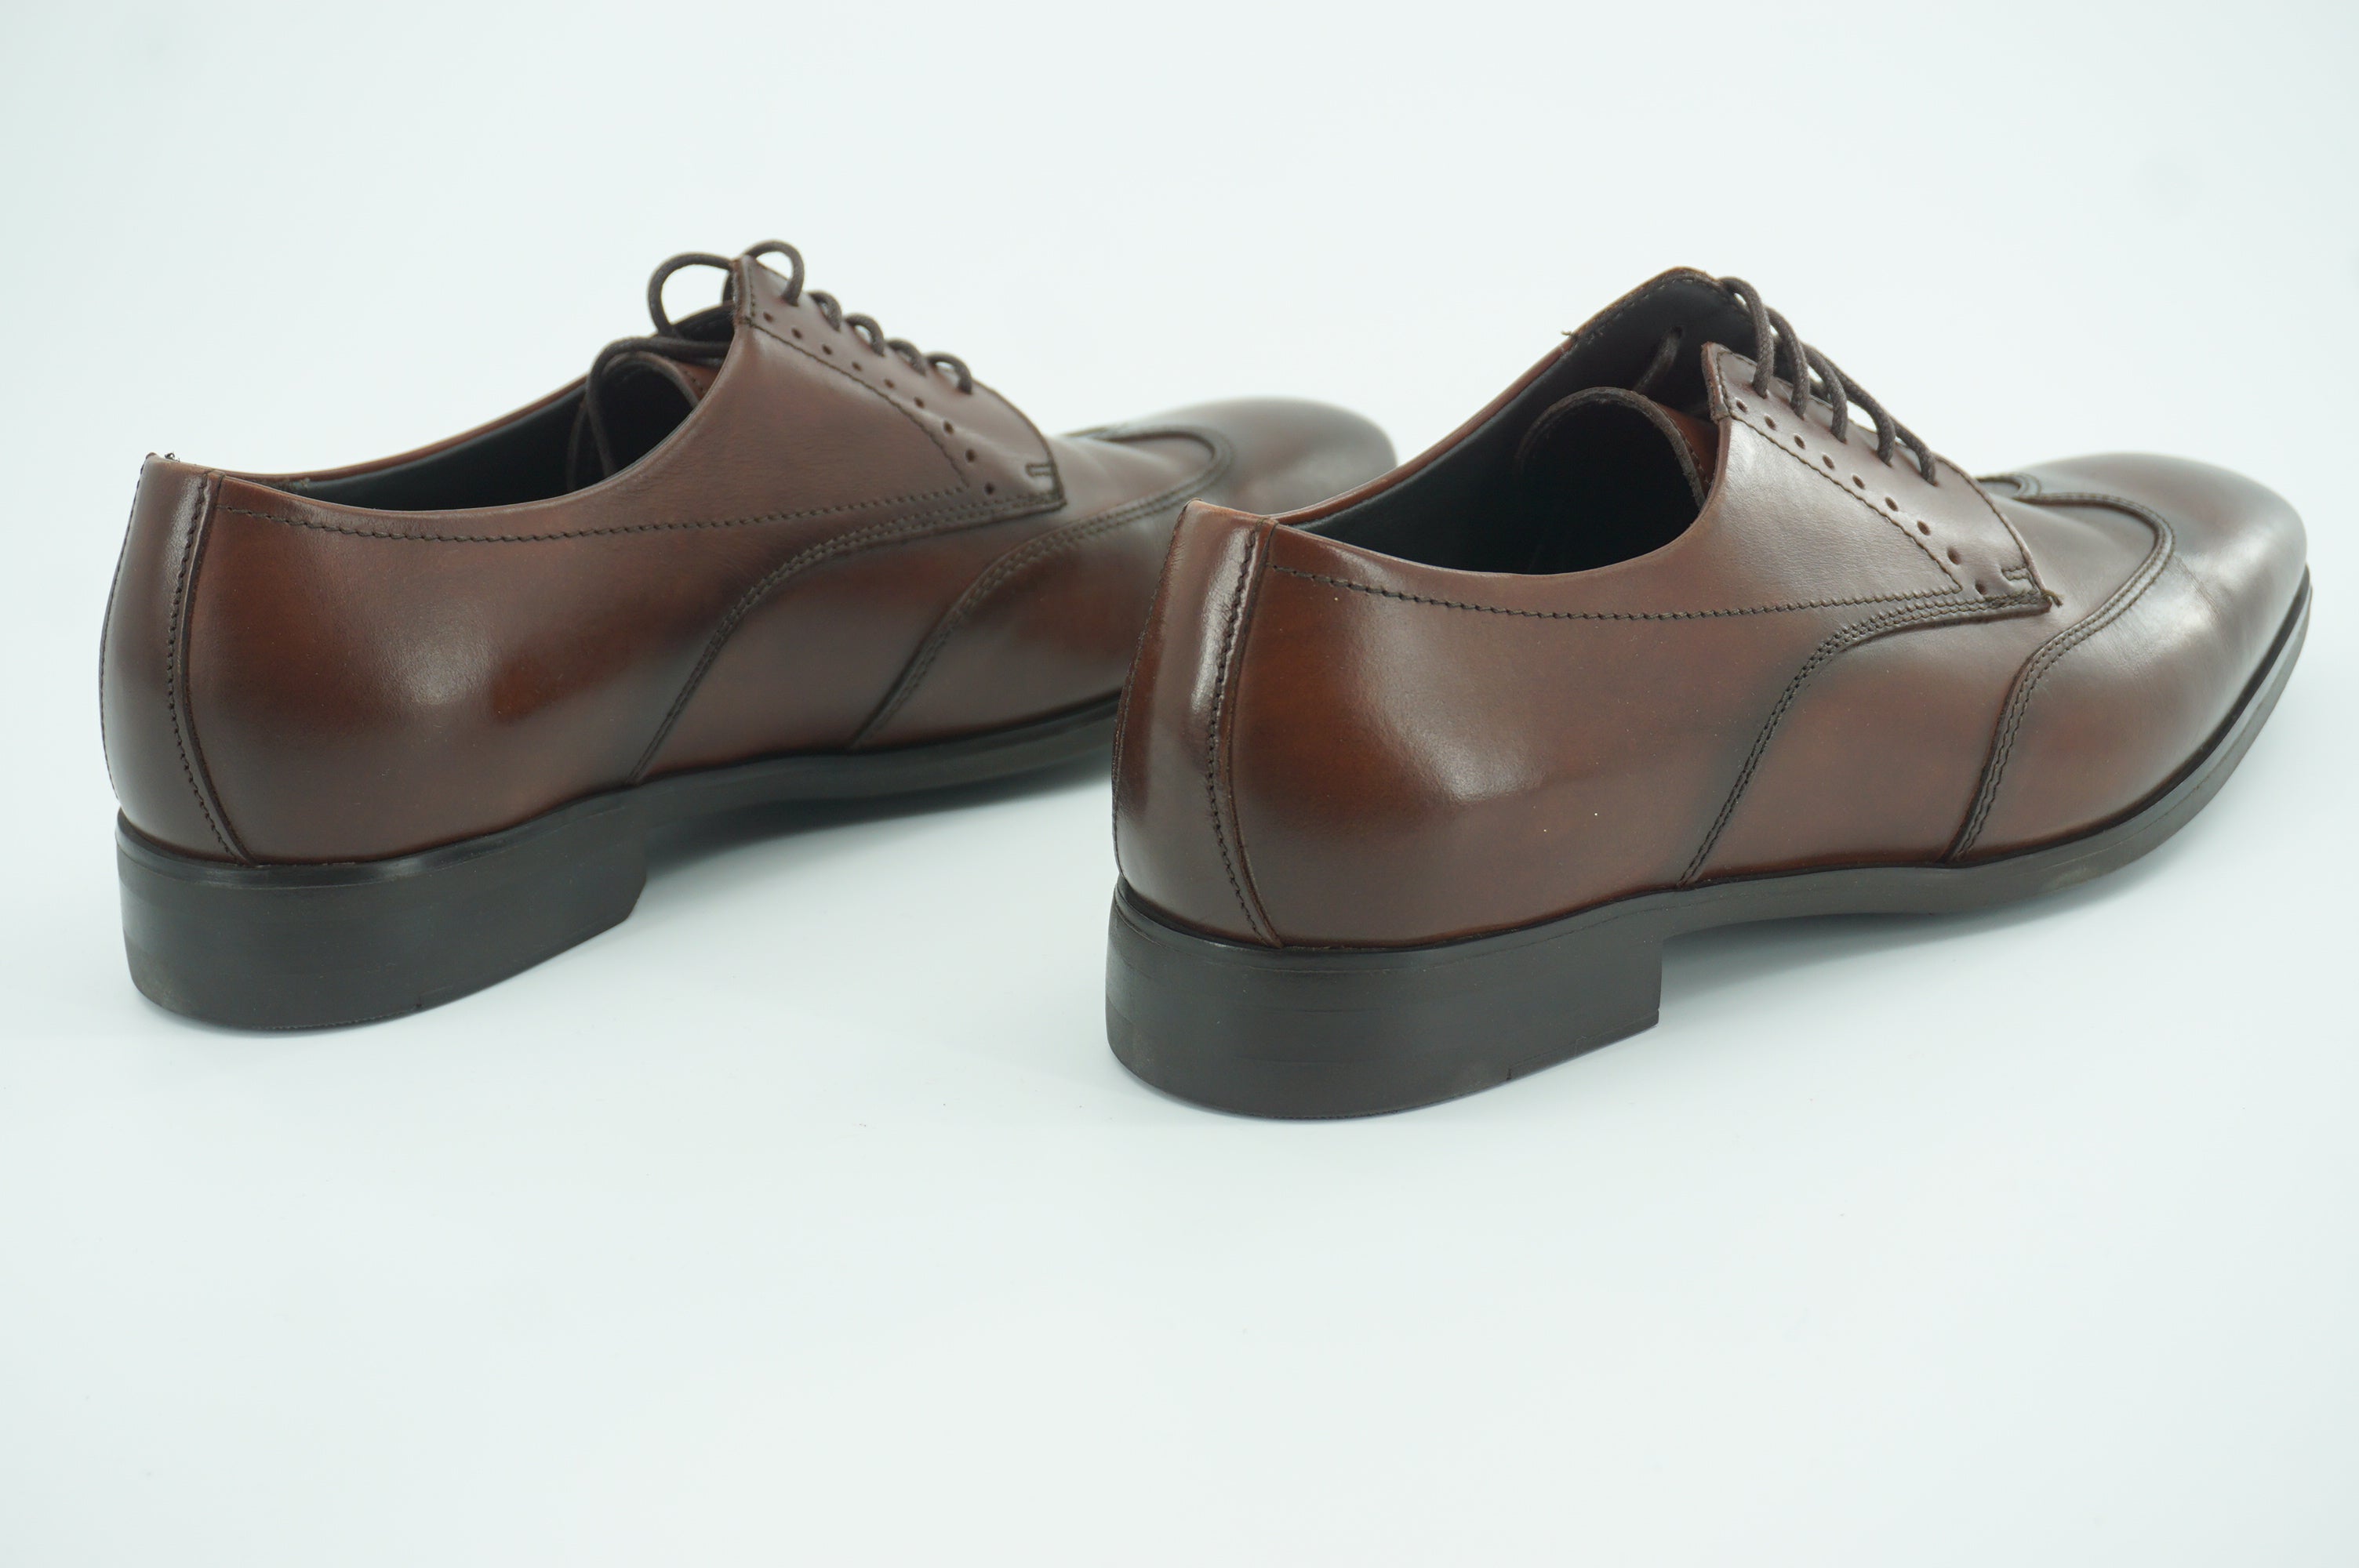 M by Bruno Magli Barni Brown wingtip Oxford Loafers Size 9 NIB $460 Men's